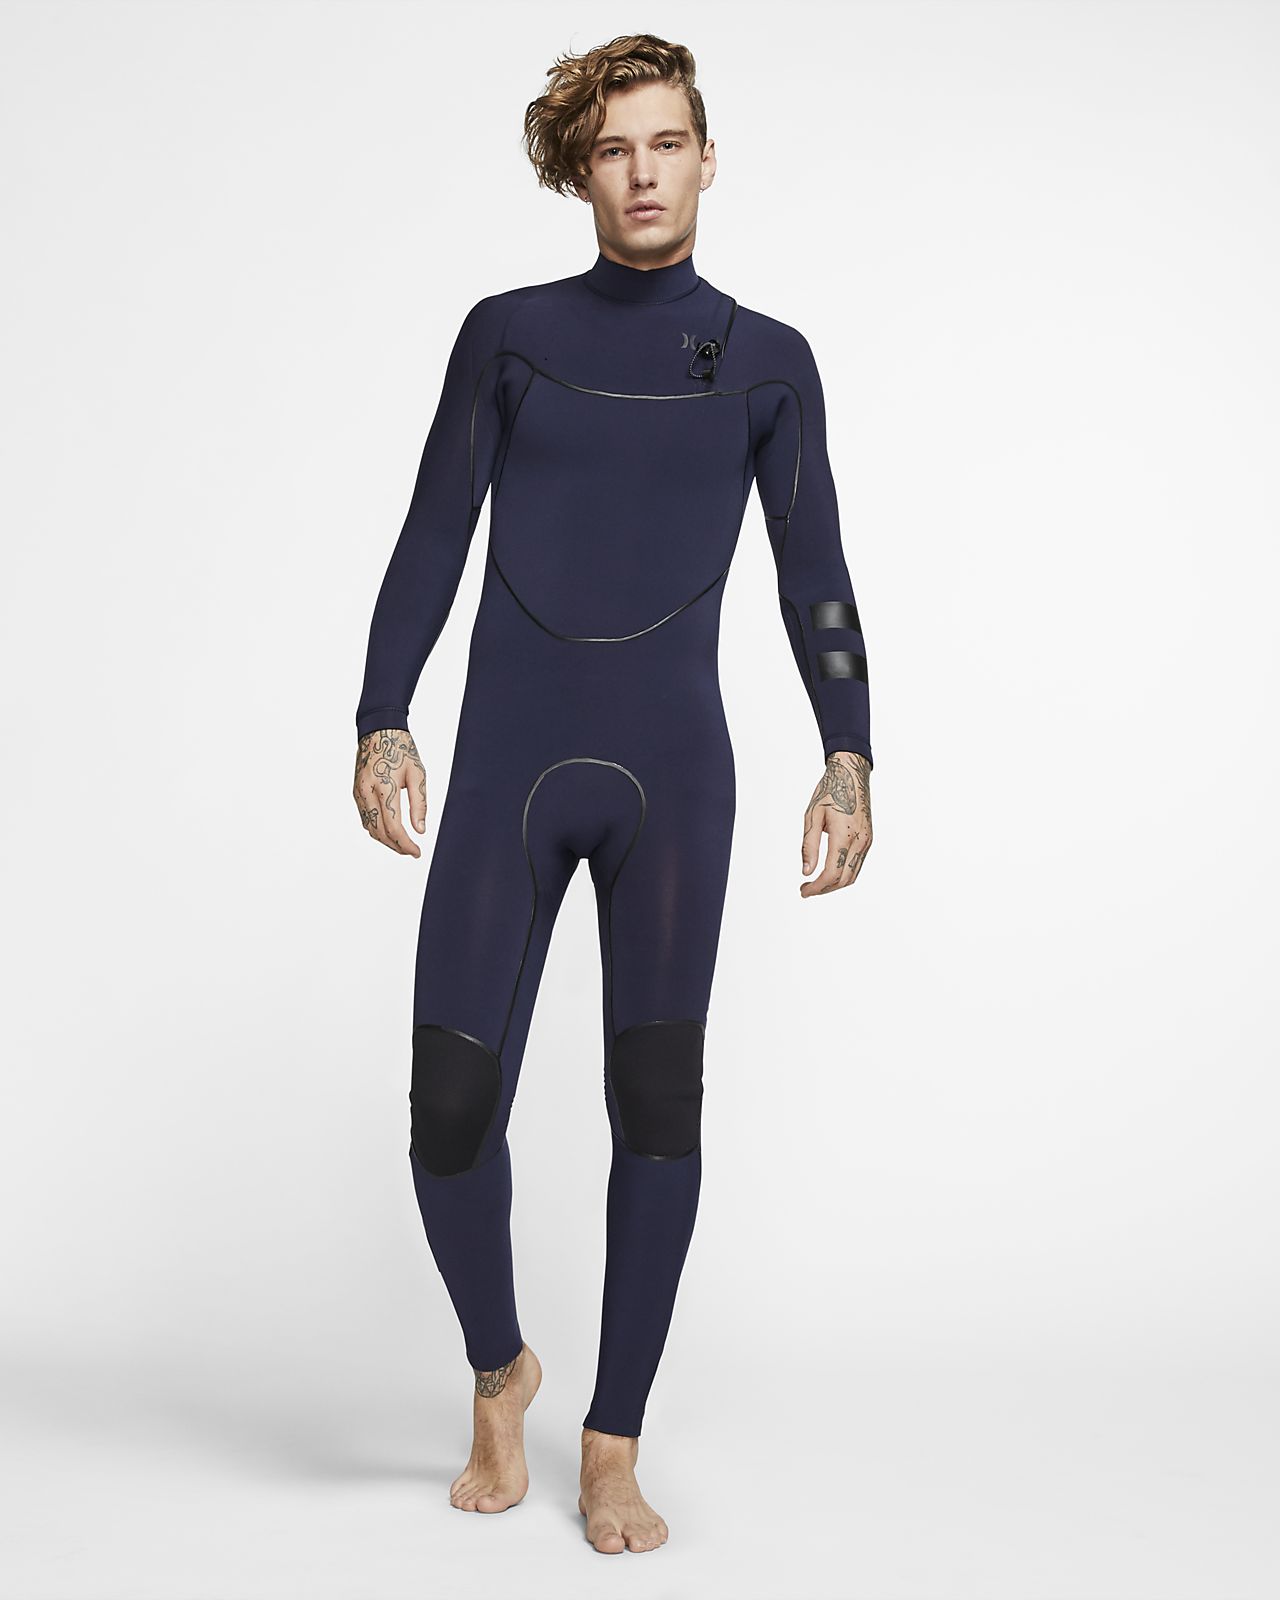 Hurley Advantage Max 4/3 Fullsuit Men's Wetsuit. Nike.com